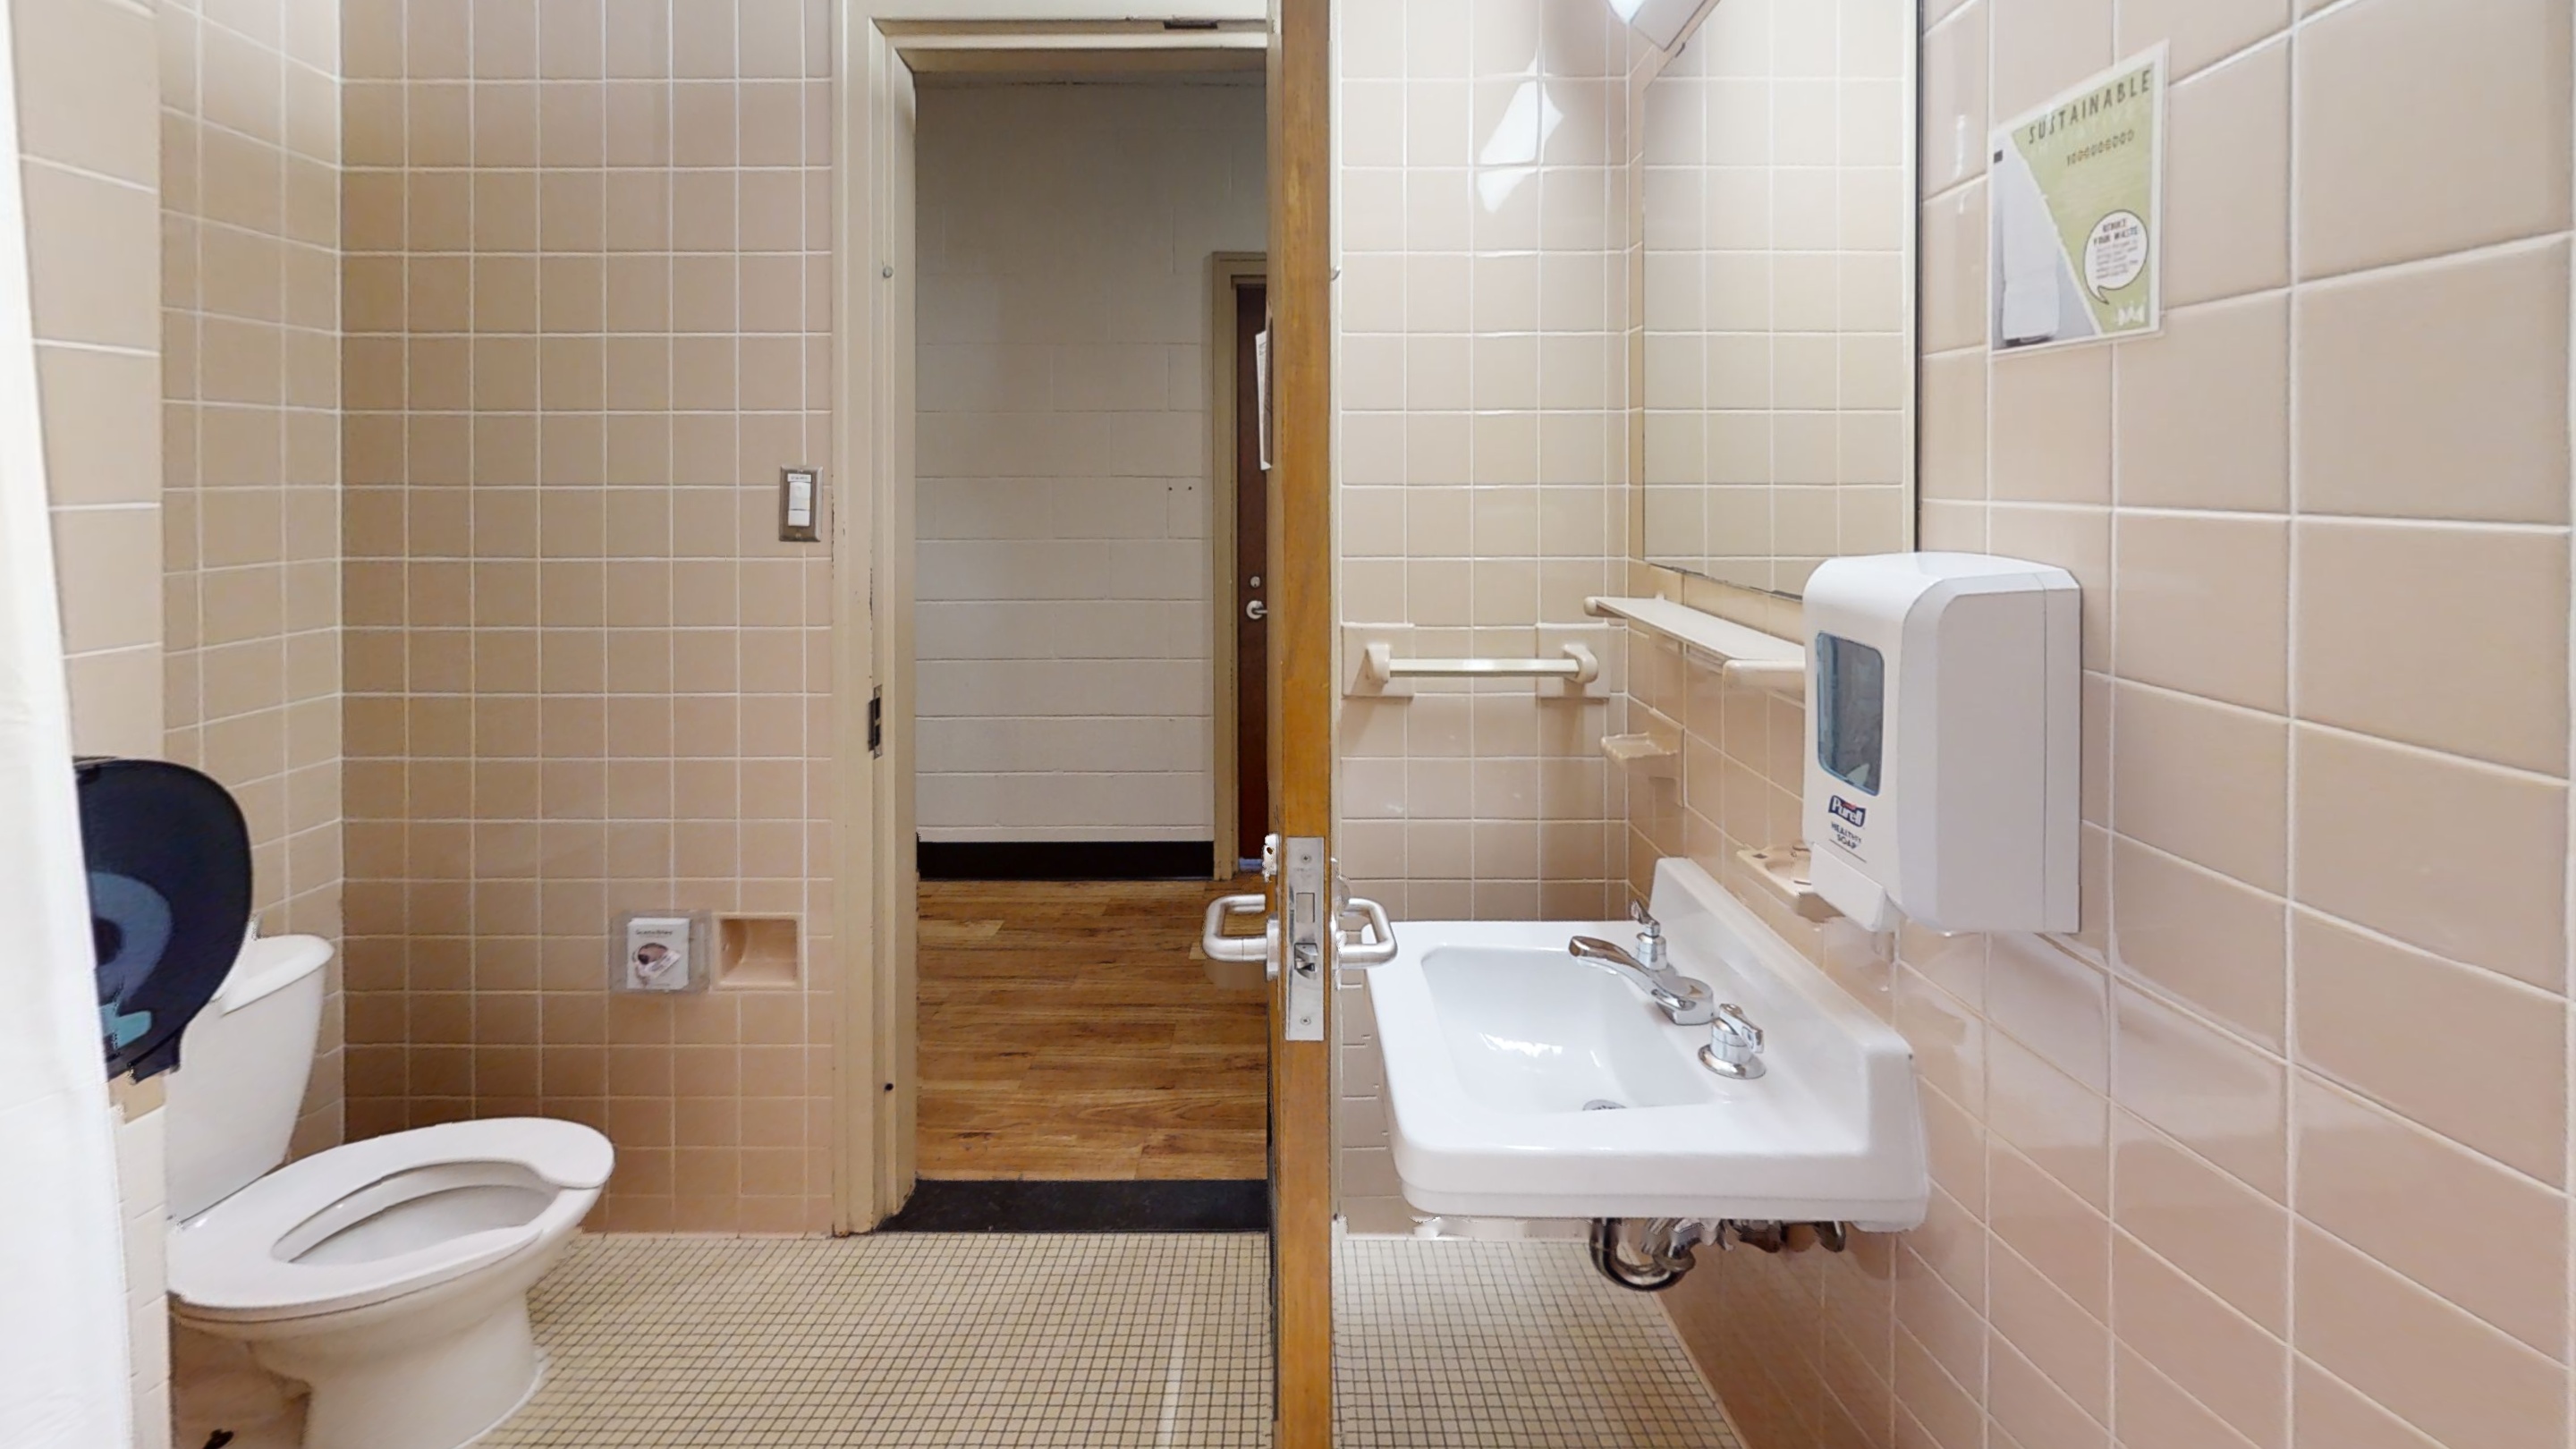 Victoria Hall Toilet Shower Room 4